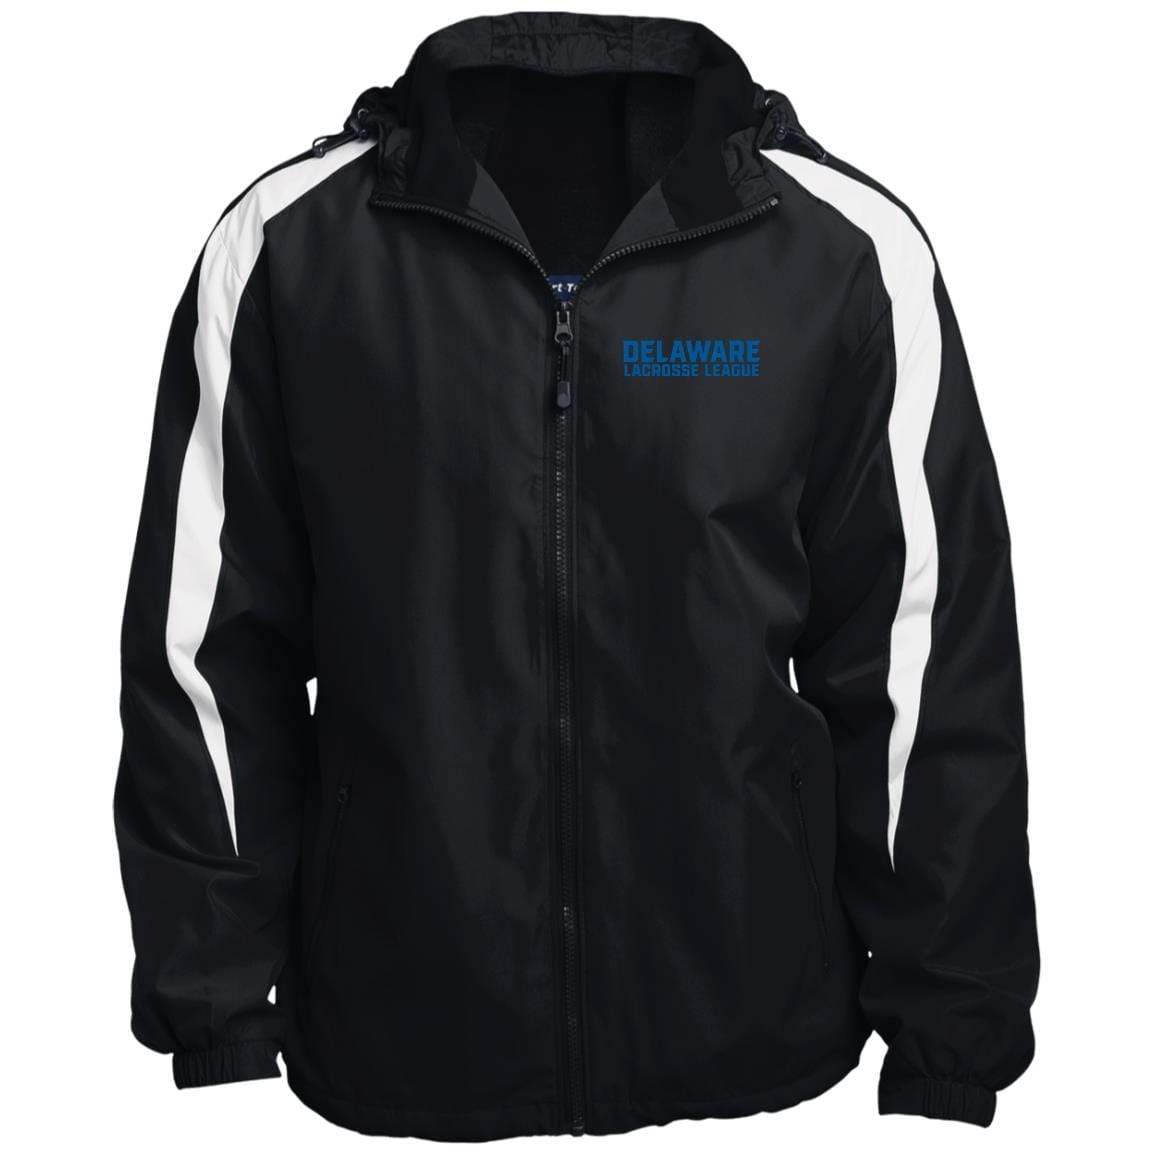 Delaware Lacrosse League Fleece Lined Hooded Premium Jacket Signature Lacrosse